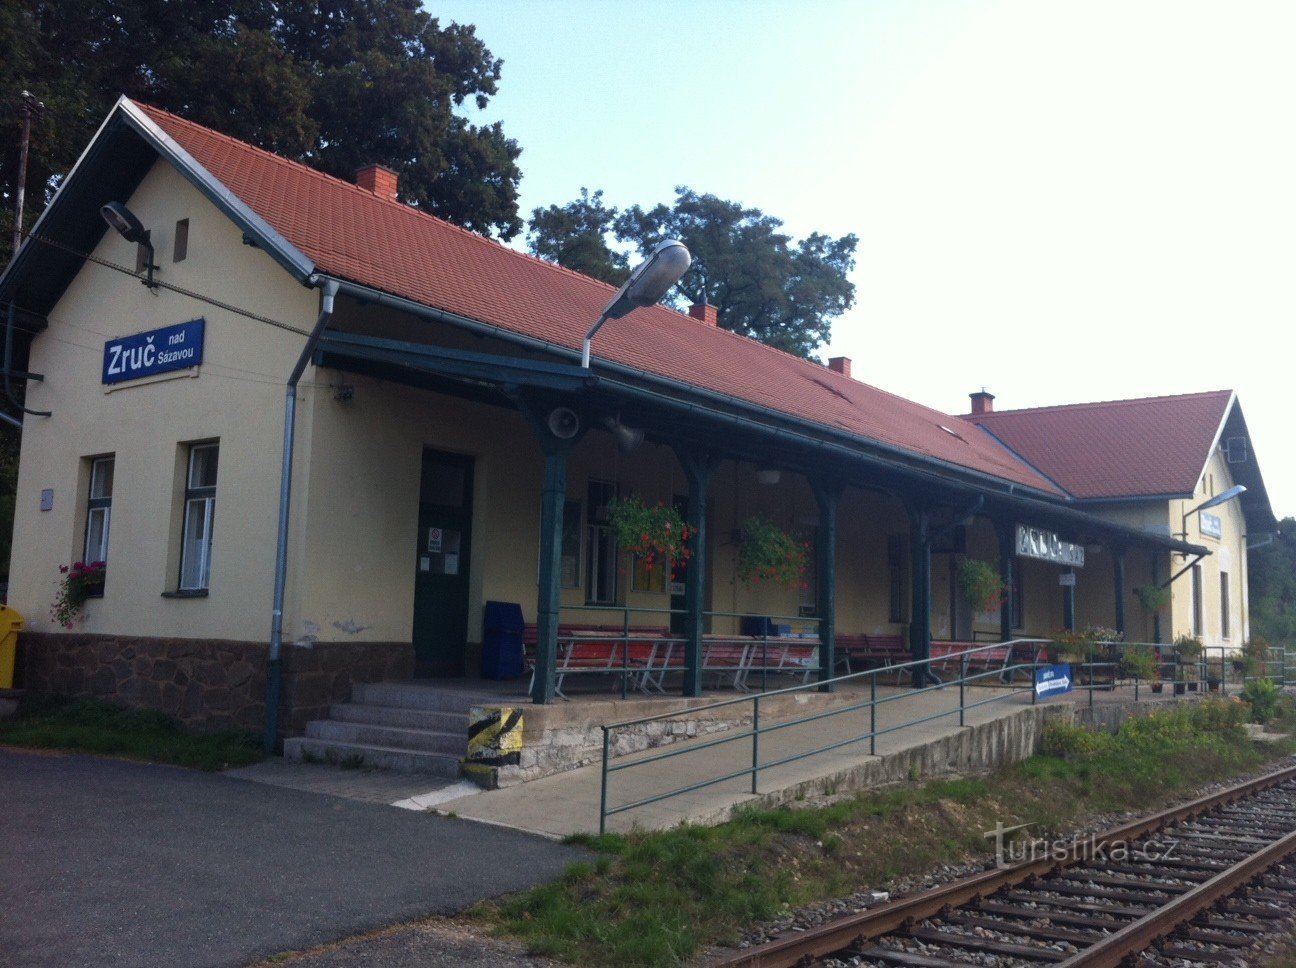 Gare de Zruč nad Sázavou